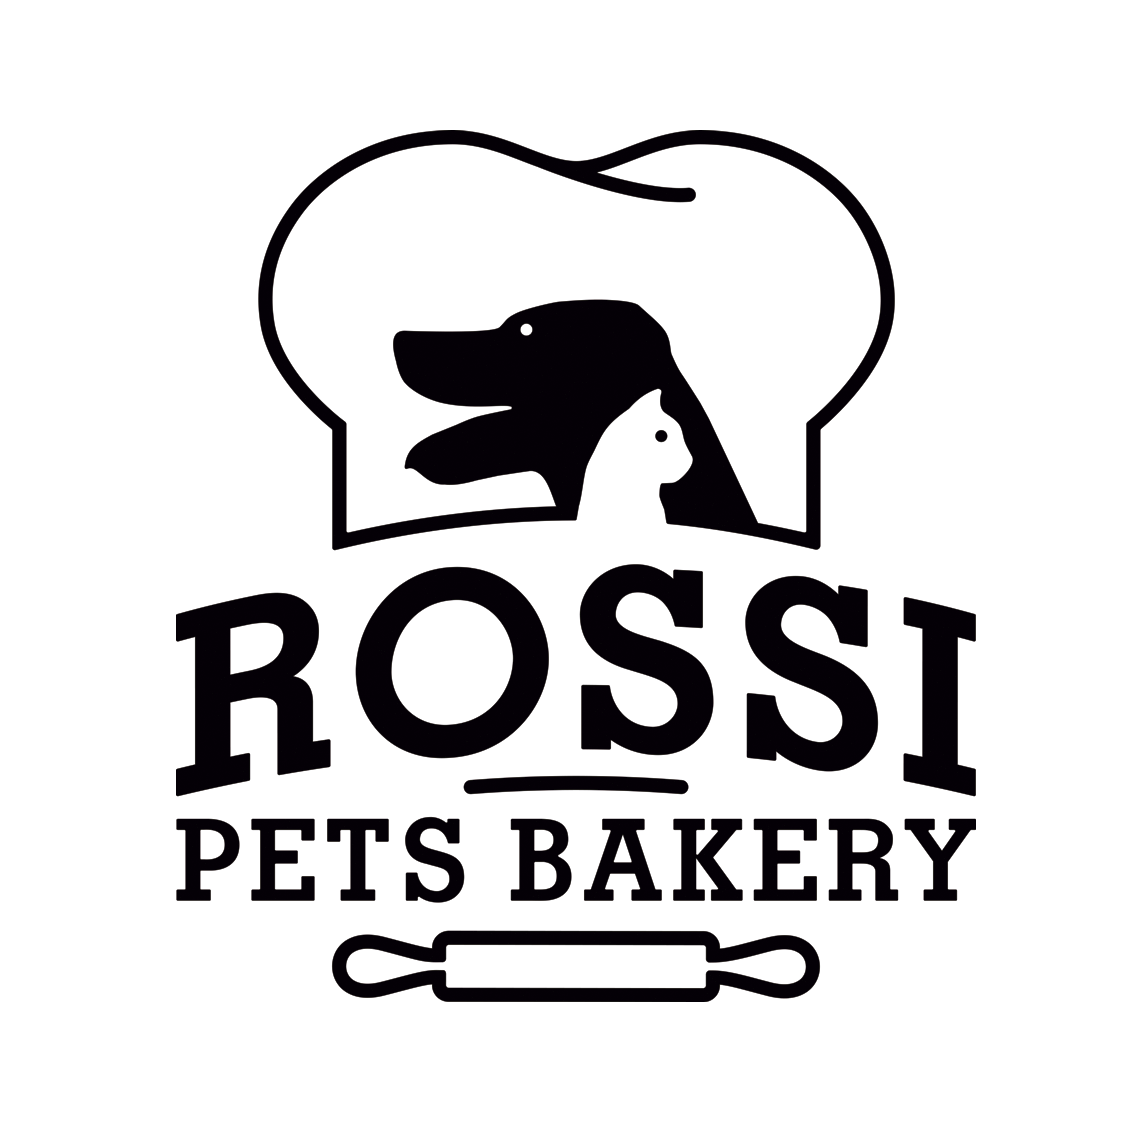 Rossy Pets Bakery